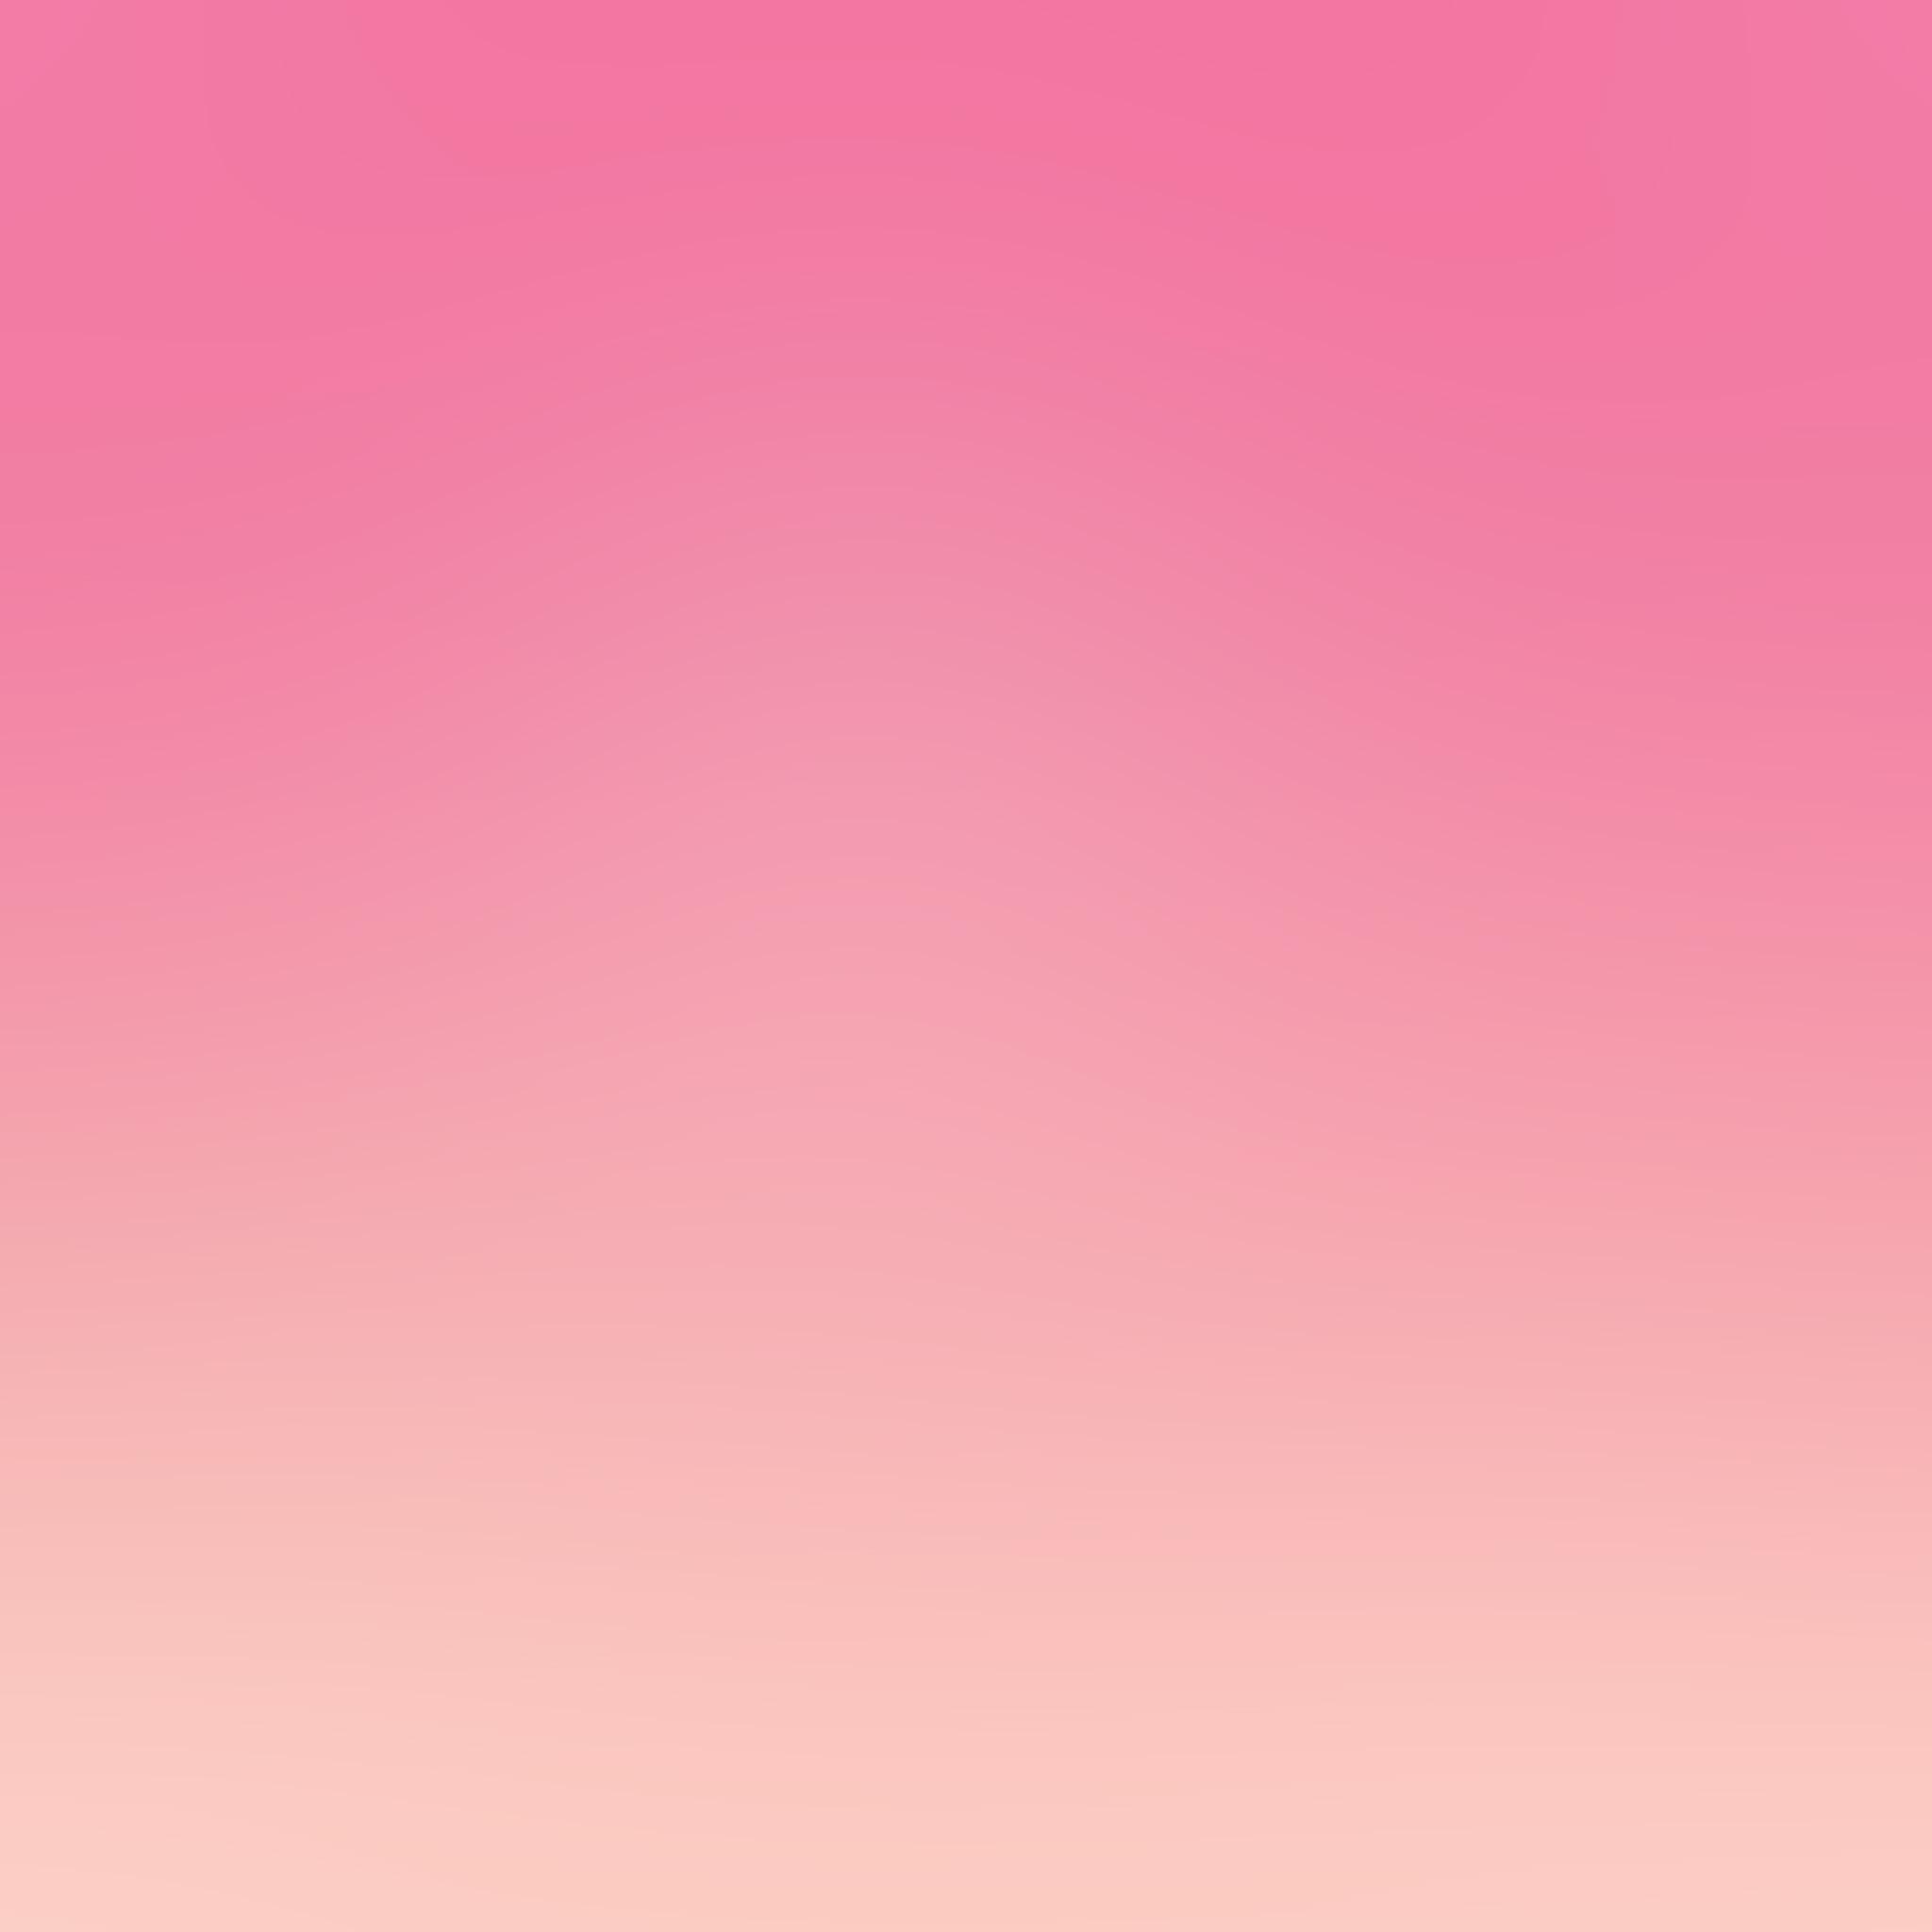 Pink Yellow Gradation Blur iPad Air Wallpaper Free Download